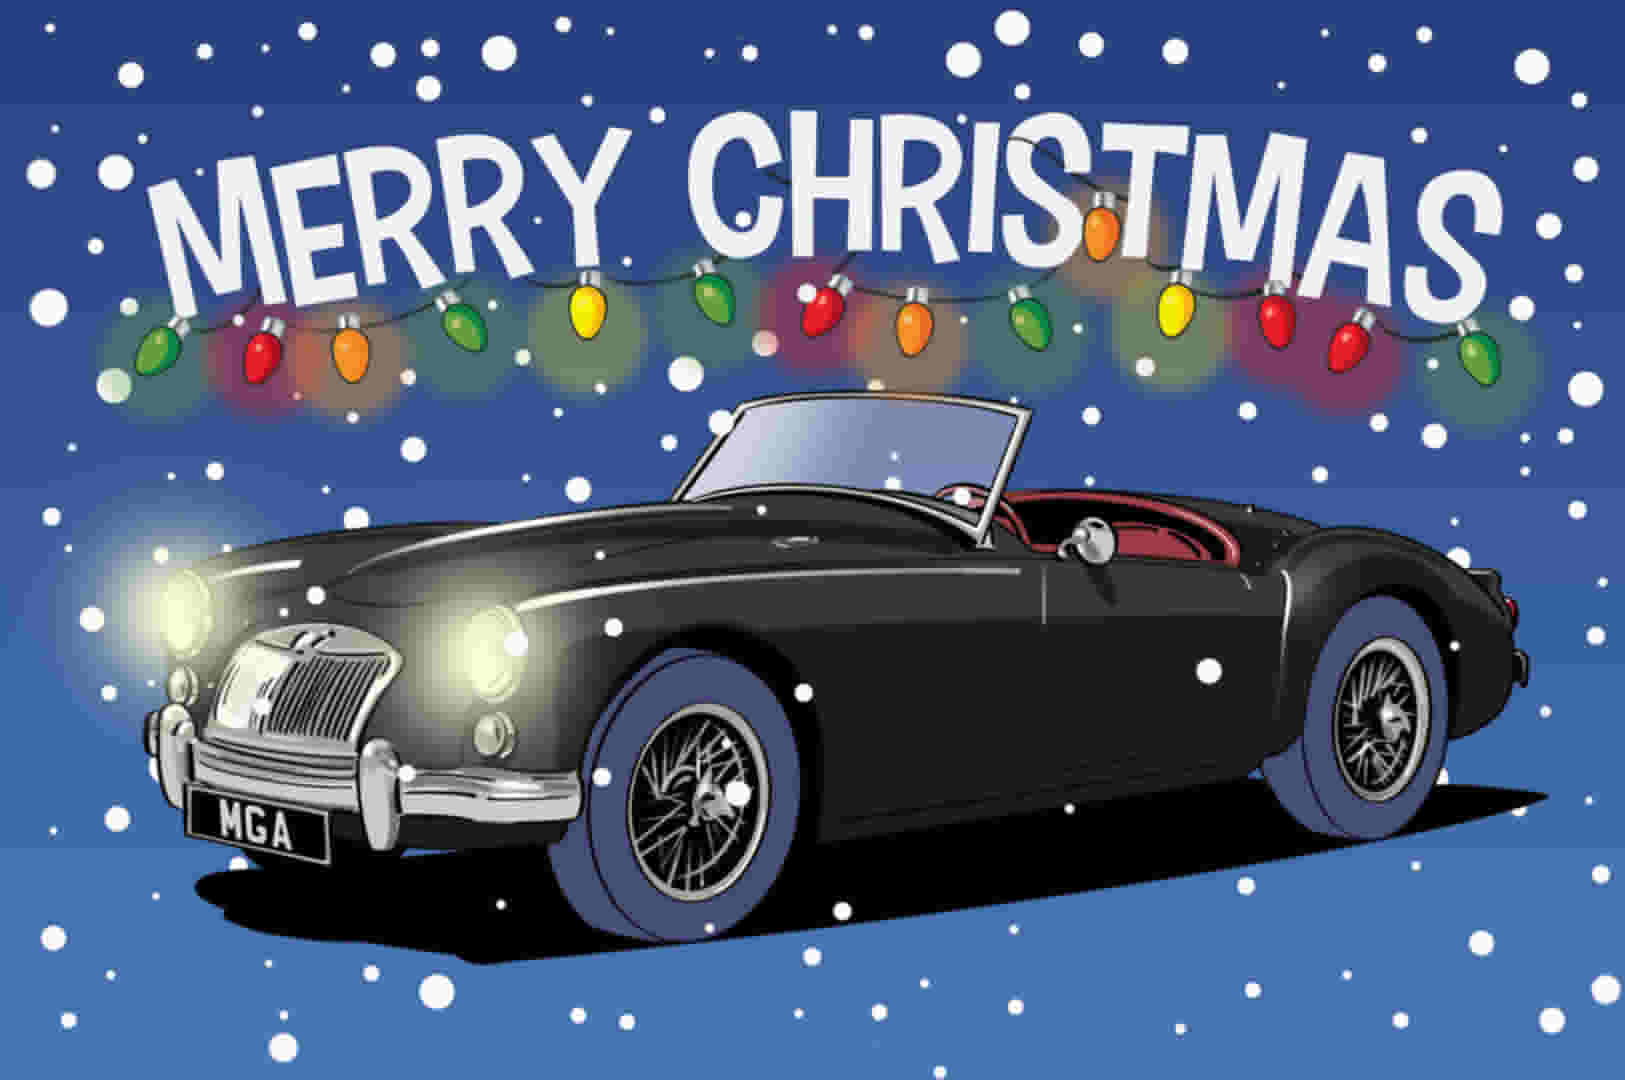 Black MGA Classic Car Christmas Card